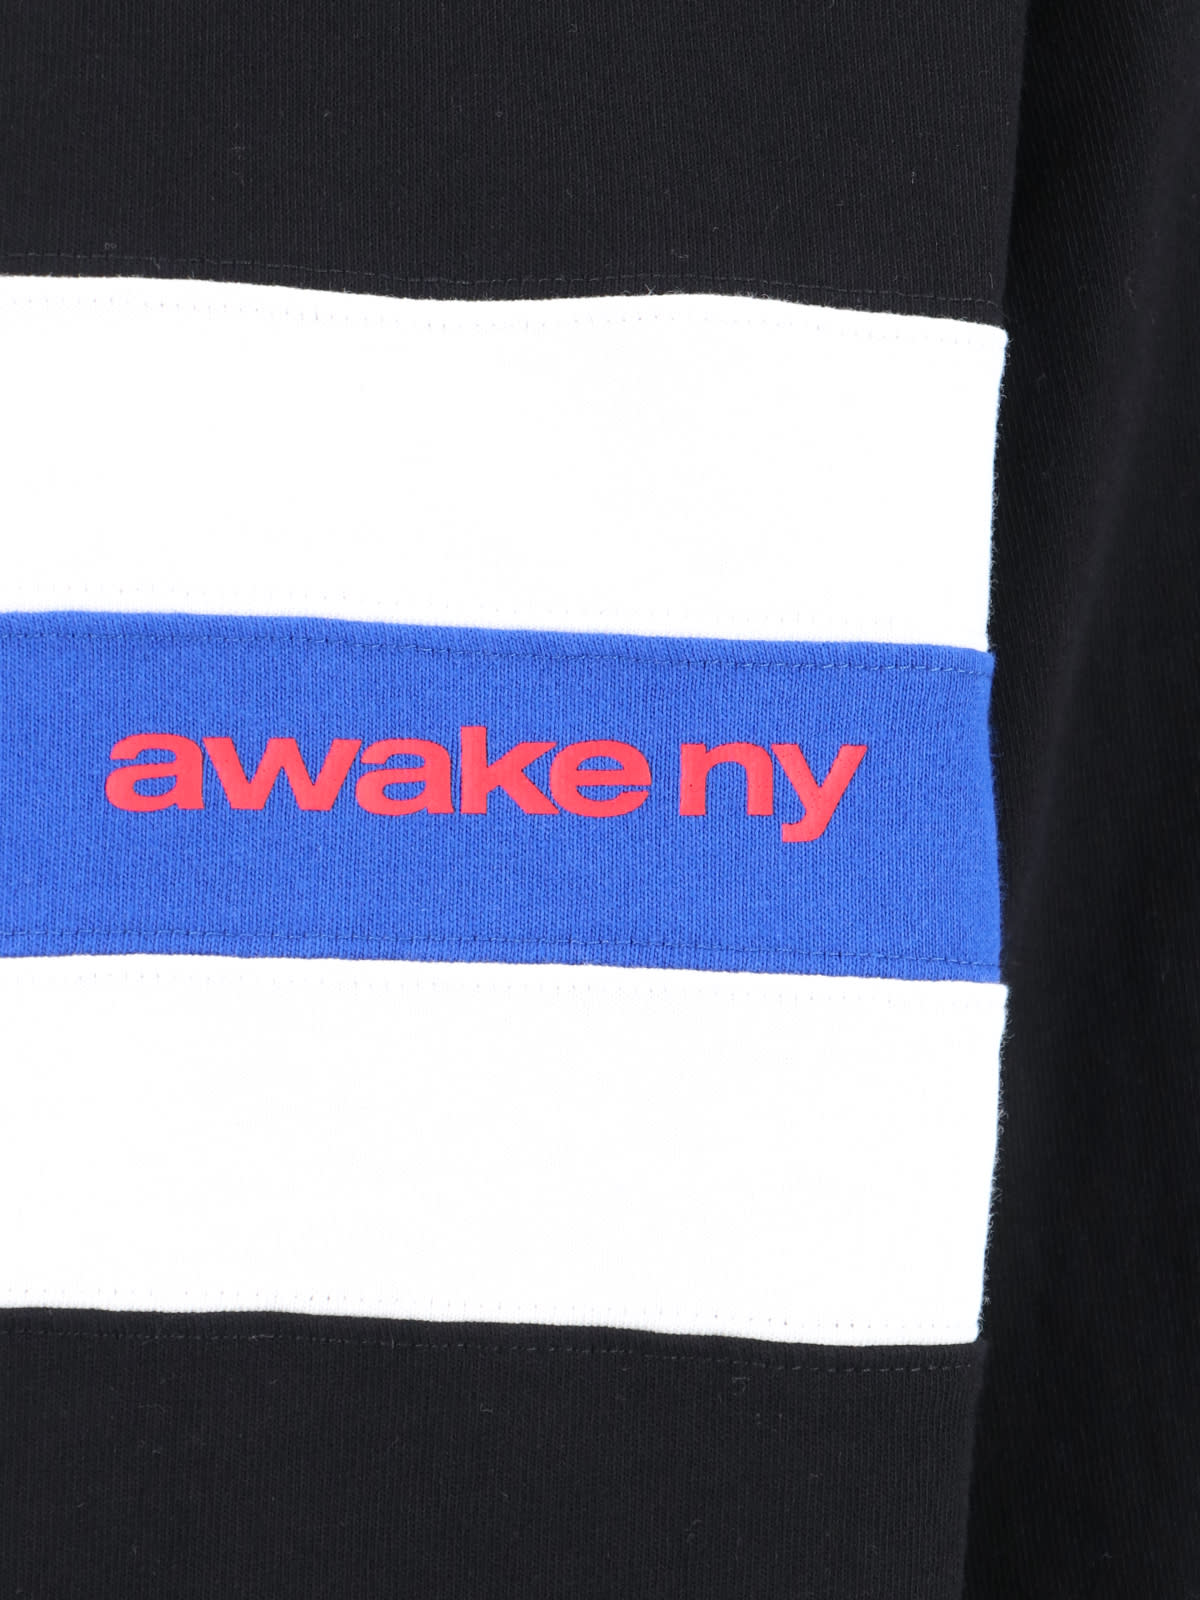 Shop Awake Ny Stripe L/s Crew Neck Sweatshirt In Black